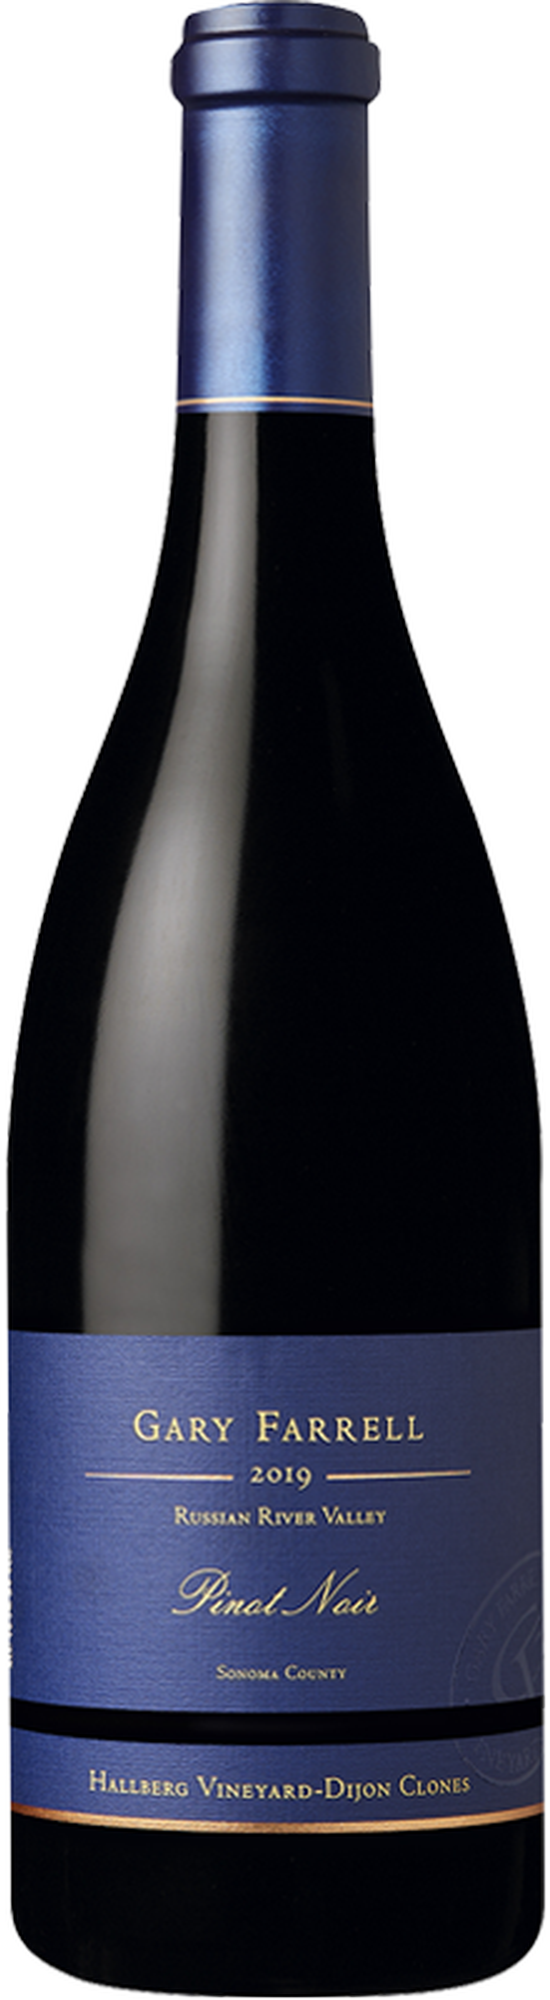 2019 Hallberg Vineyard Dijon Clones Pinot Noir